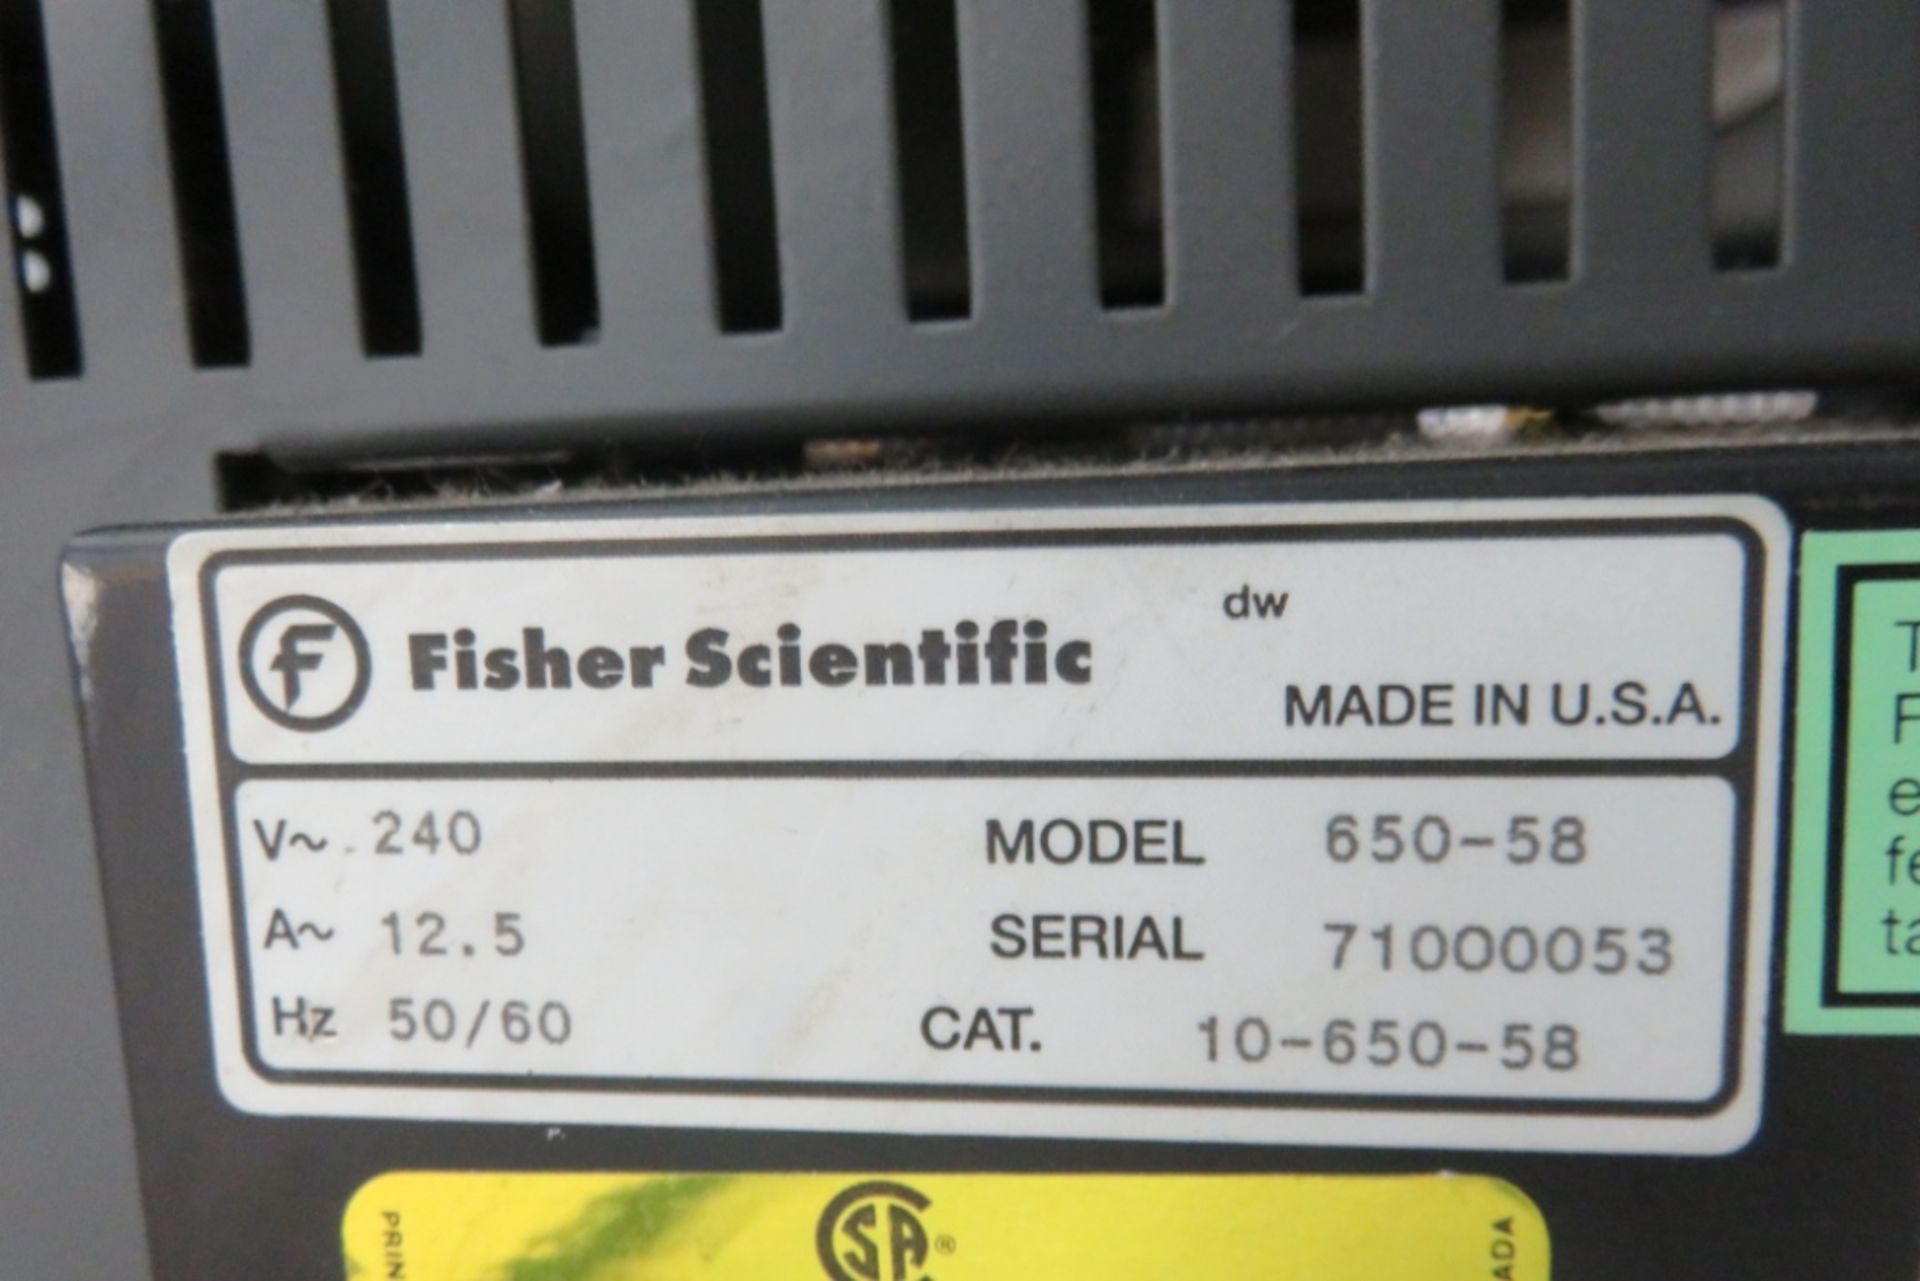 Fisher Scientific 650-58 Digital Laboratory Furnace - Image 5 of 5